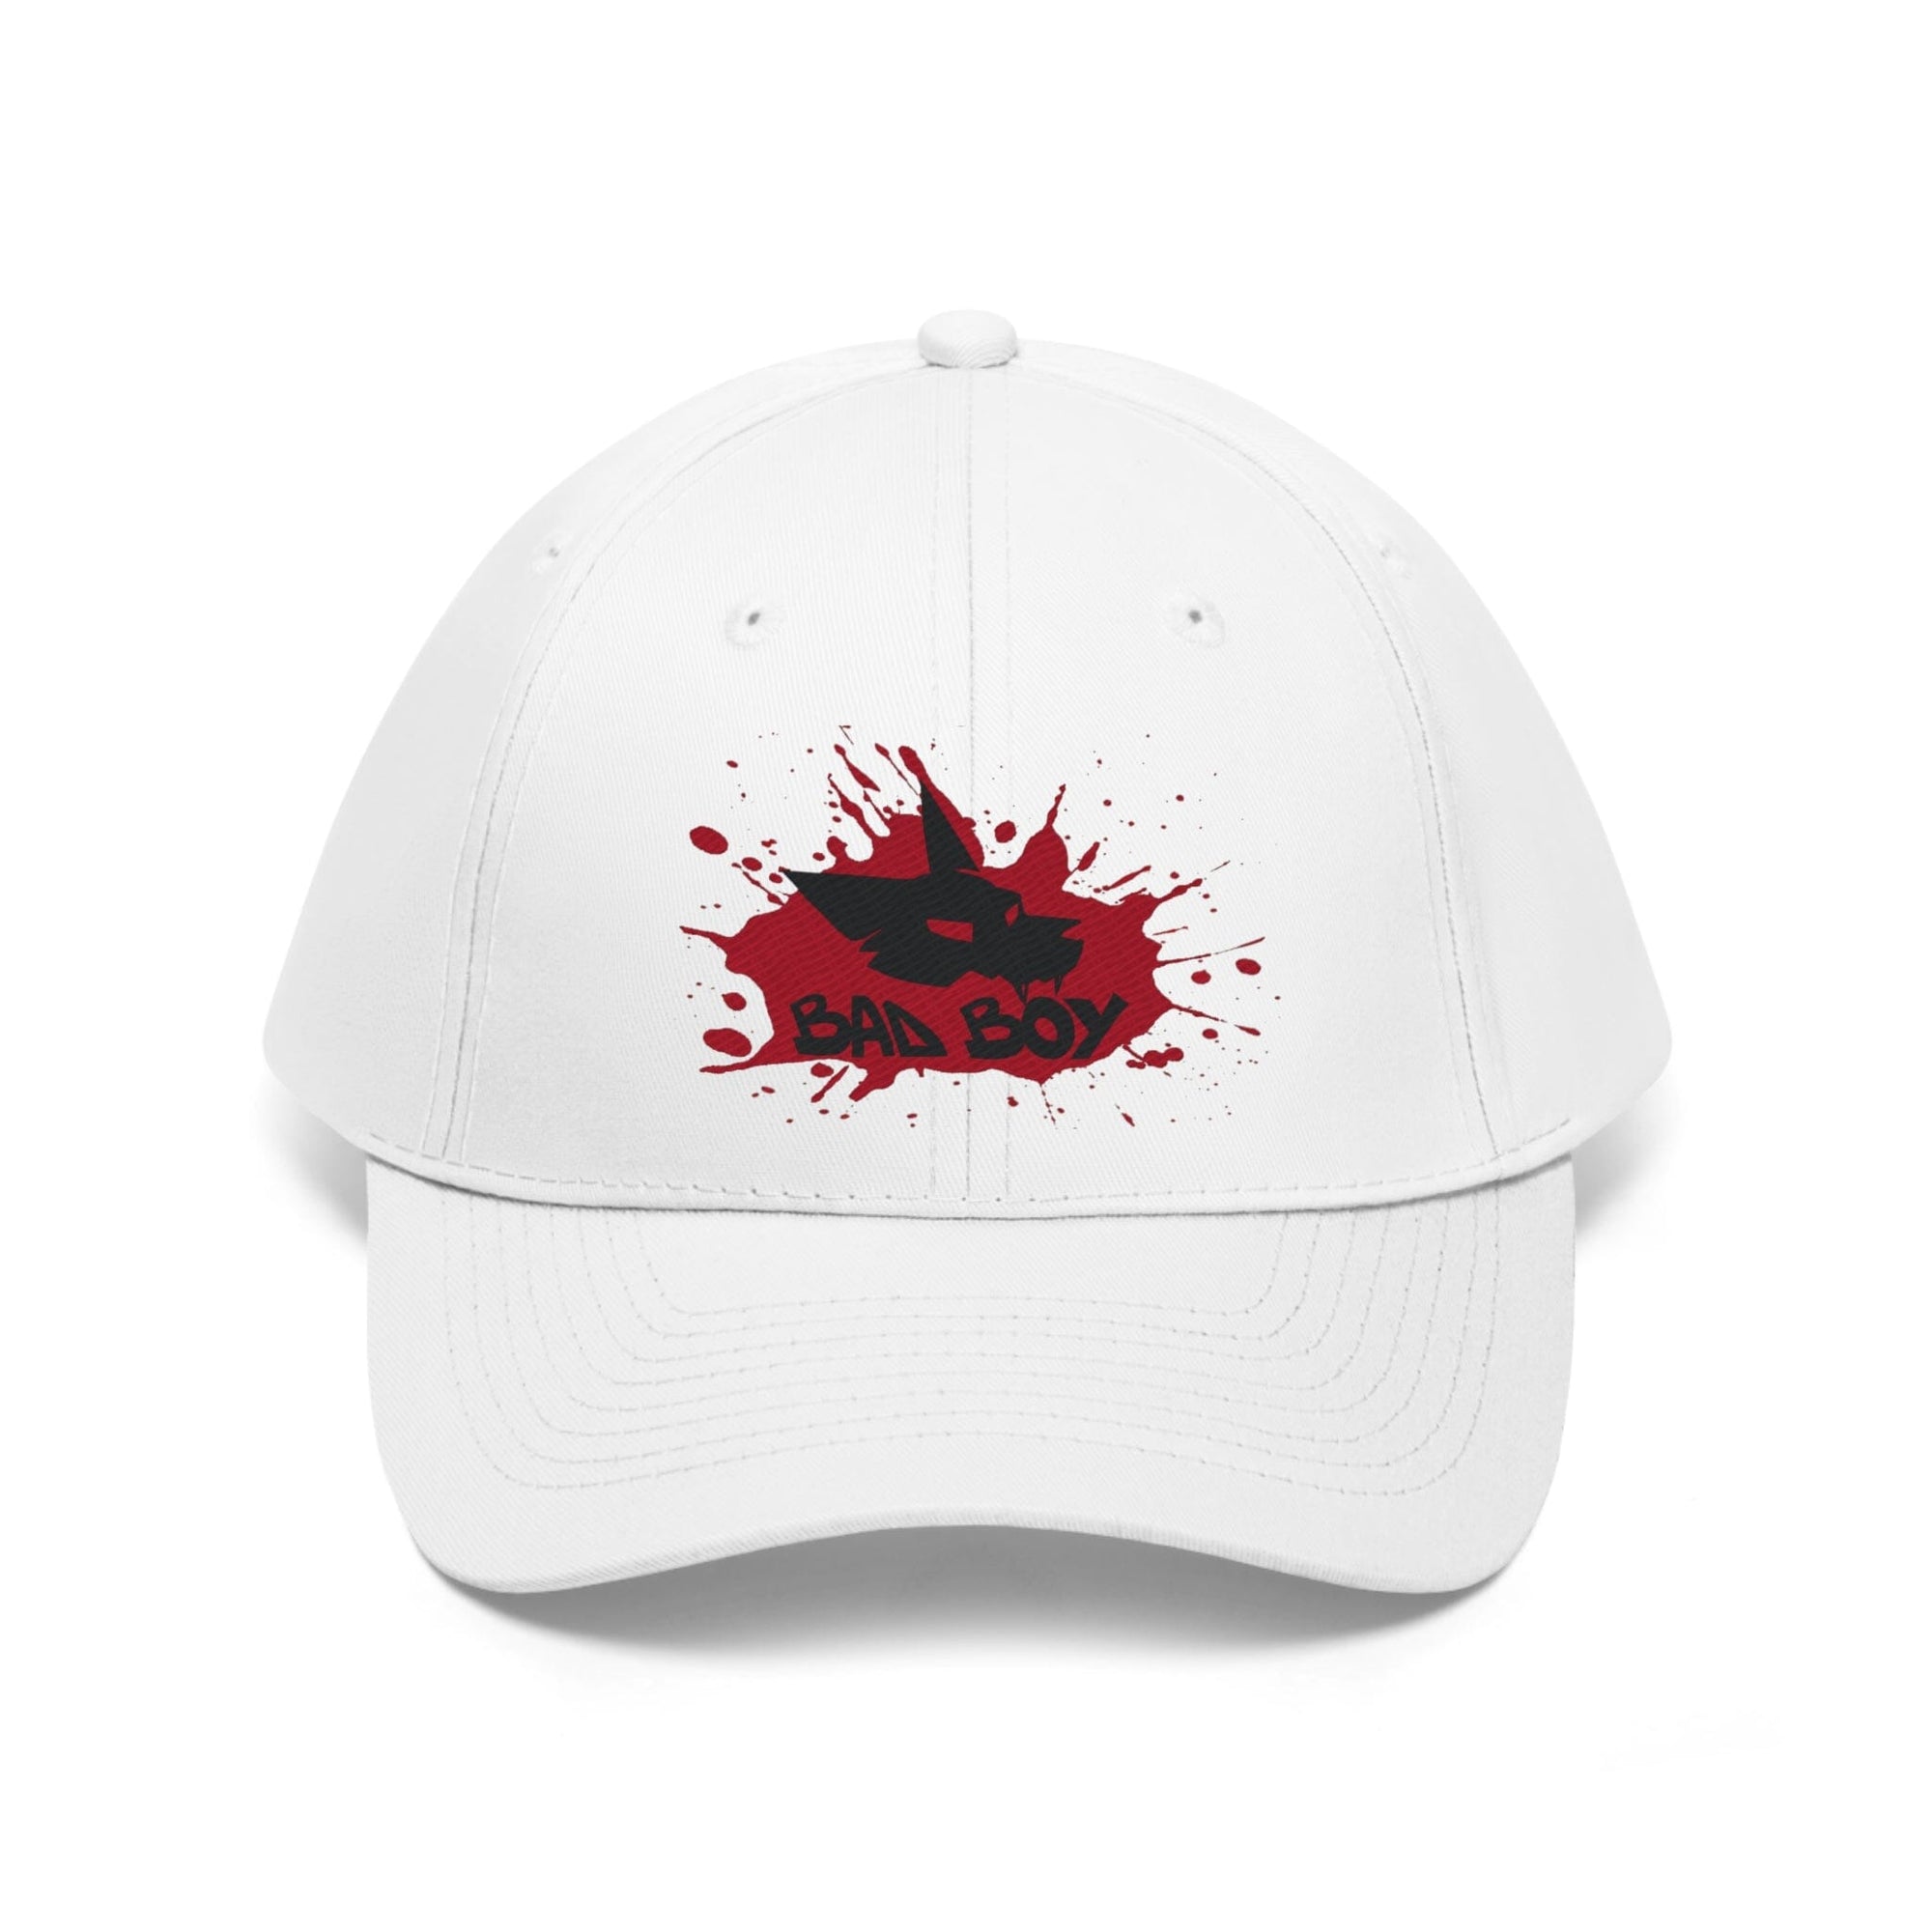 Bloodlust Bad Boy - Hat Hats Zenonclaw White One size 